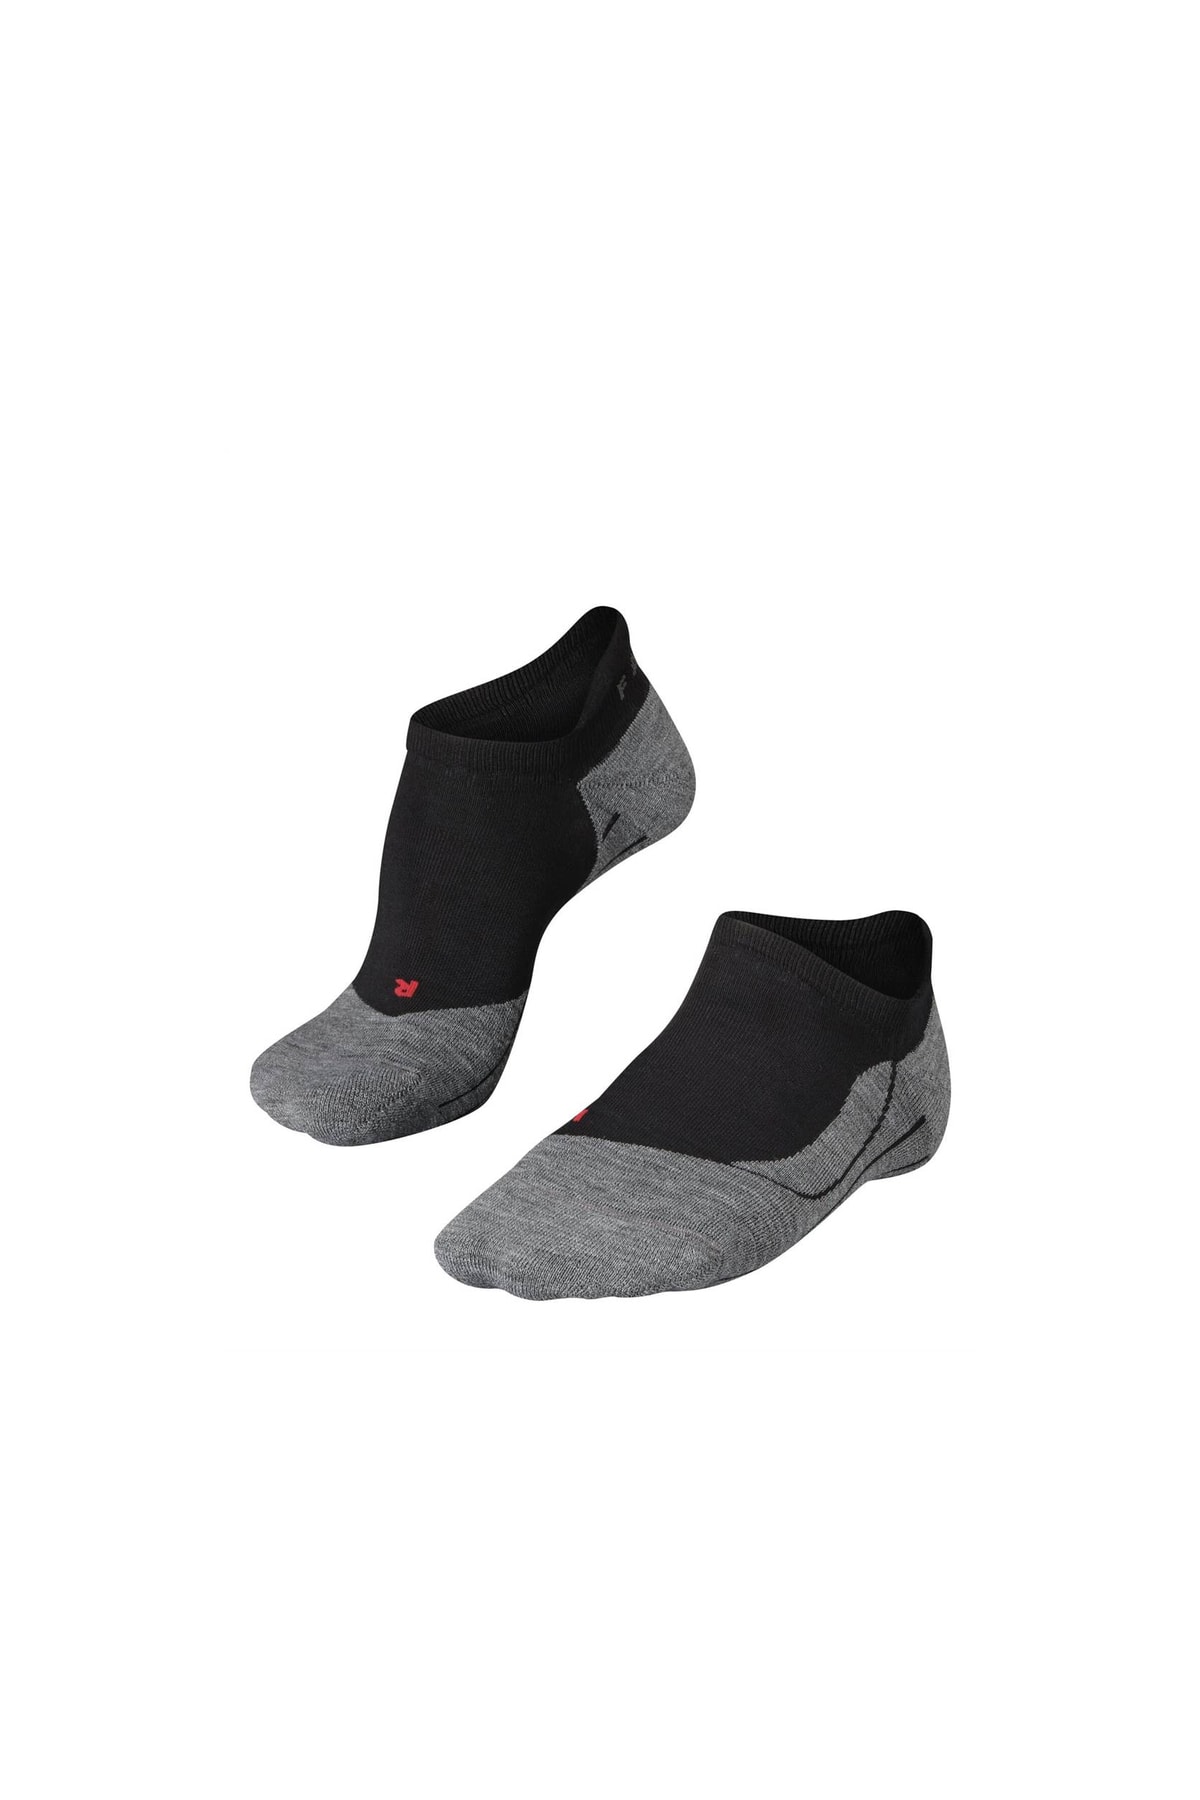 FALKE Socken Grau Casual Fast ausverkauft